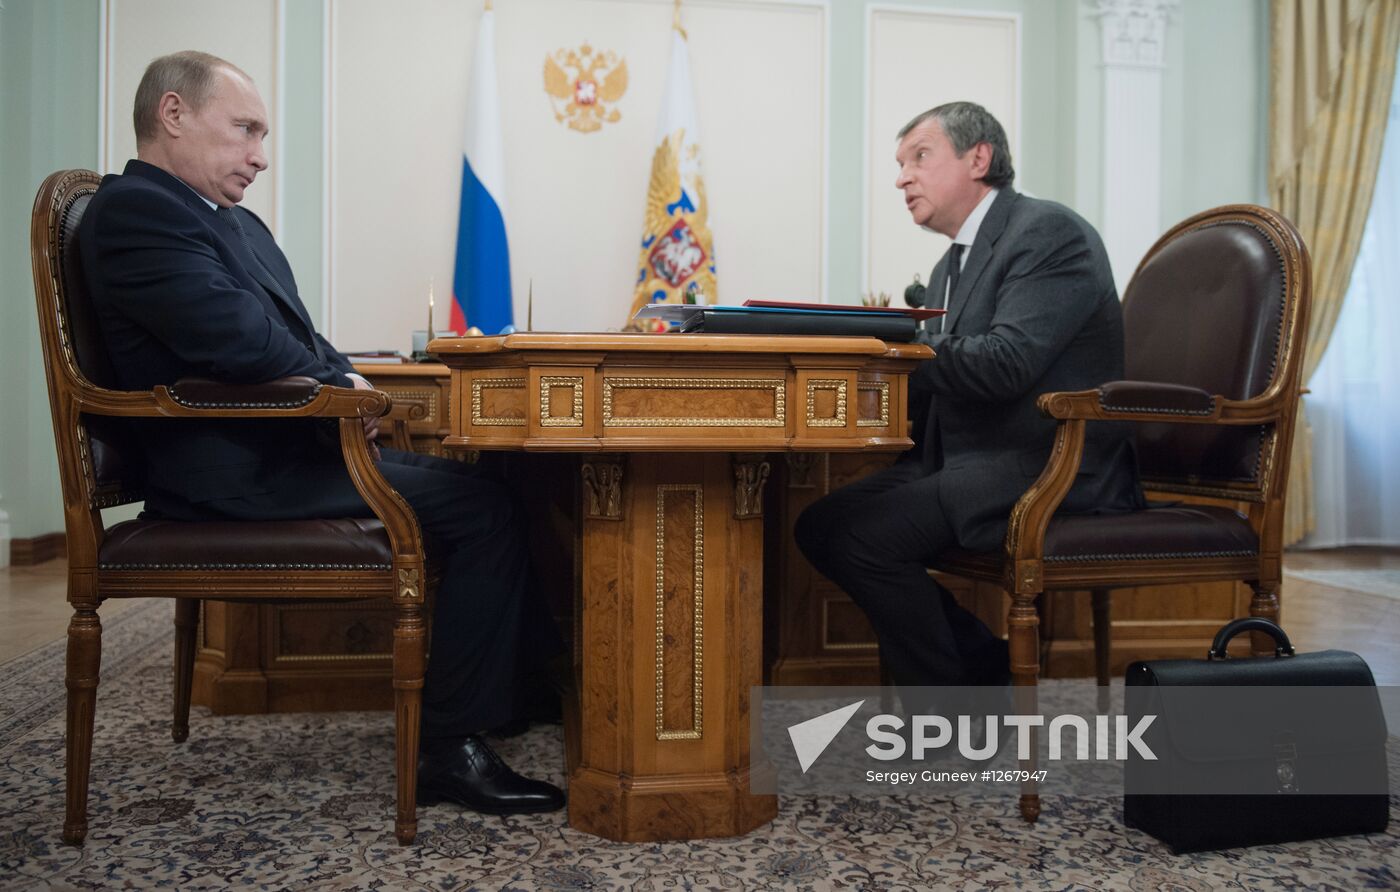 Vladimir Putin meets with Igor Sechin in Novo-Ogaryovo